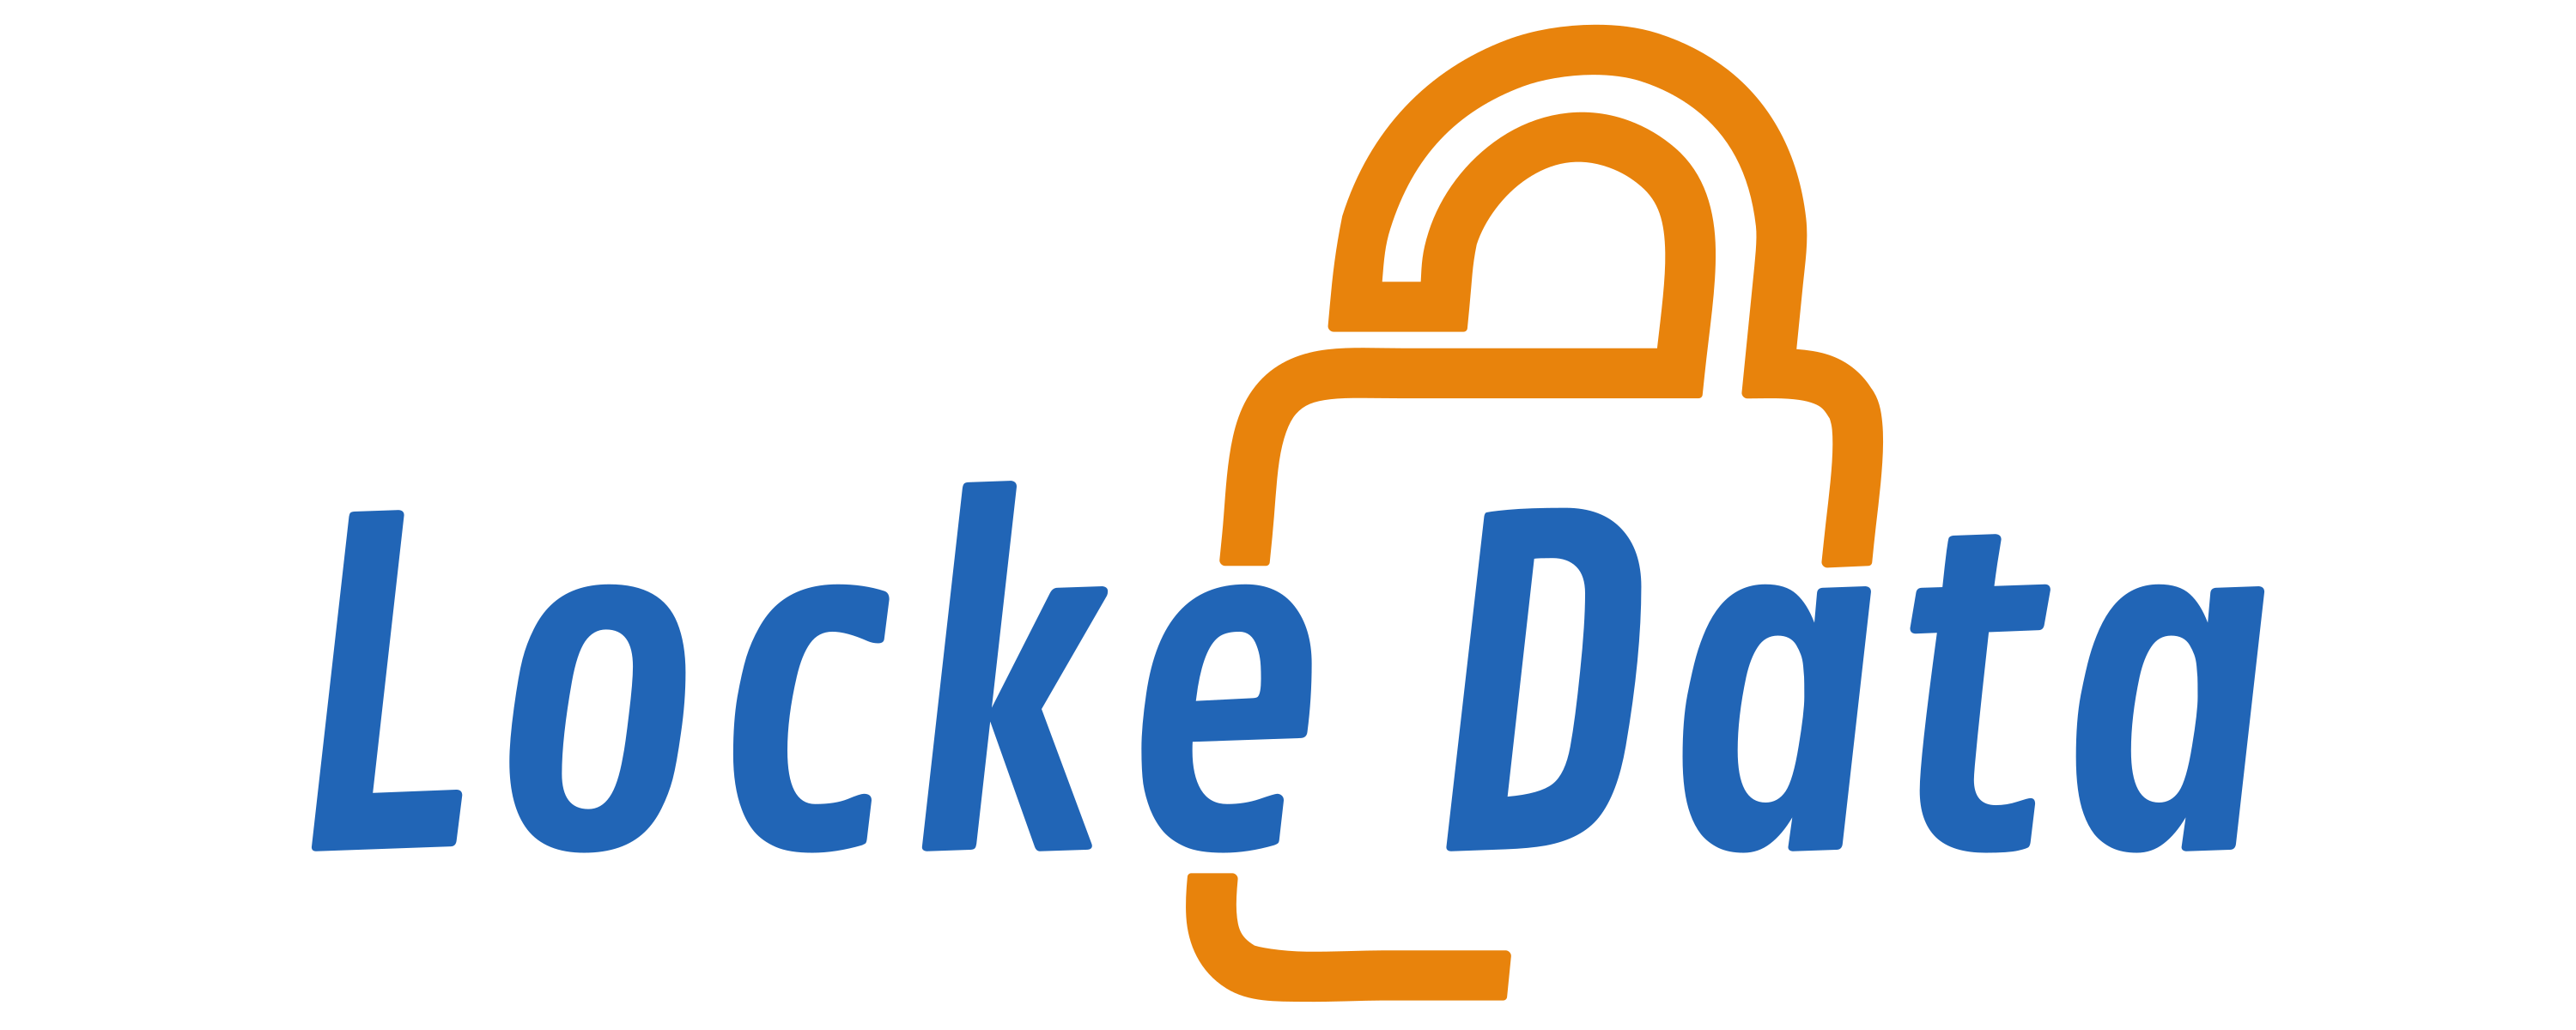 Locke data sponsors us too